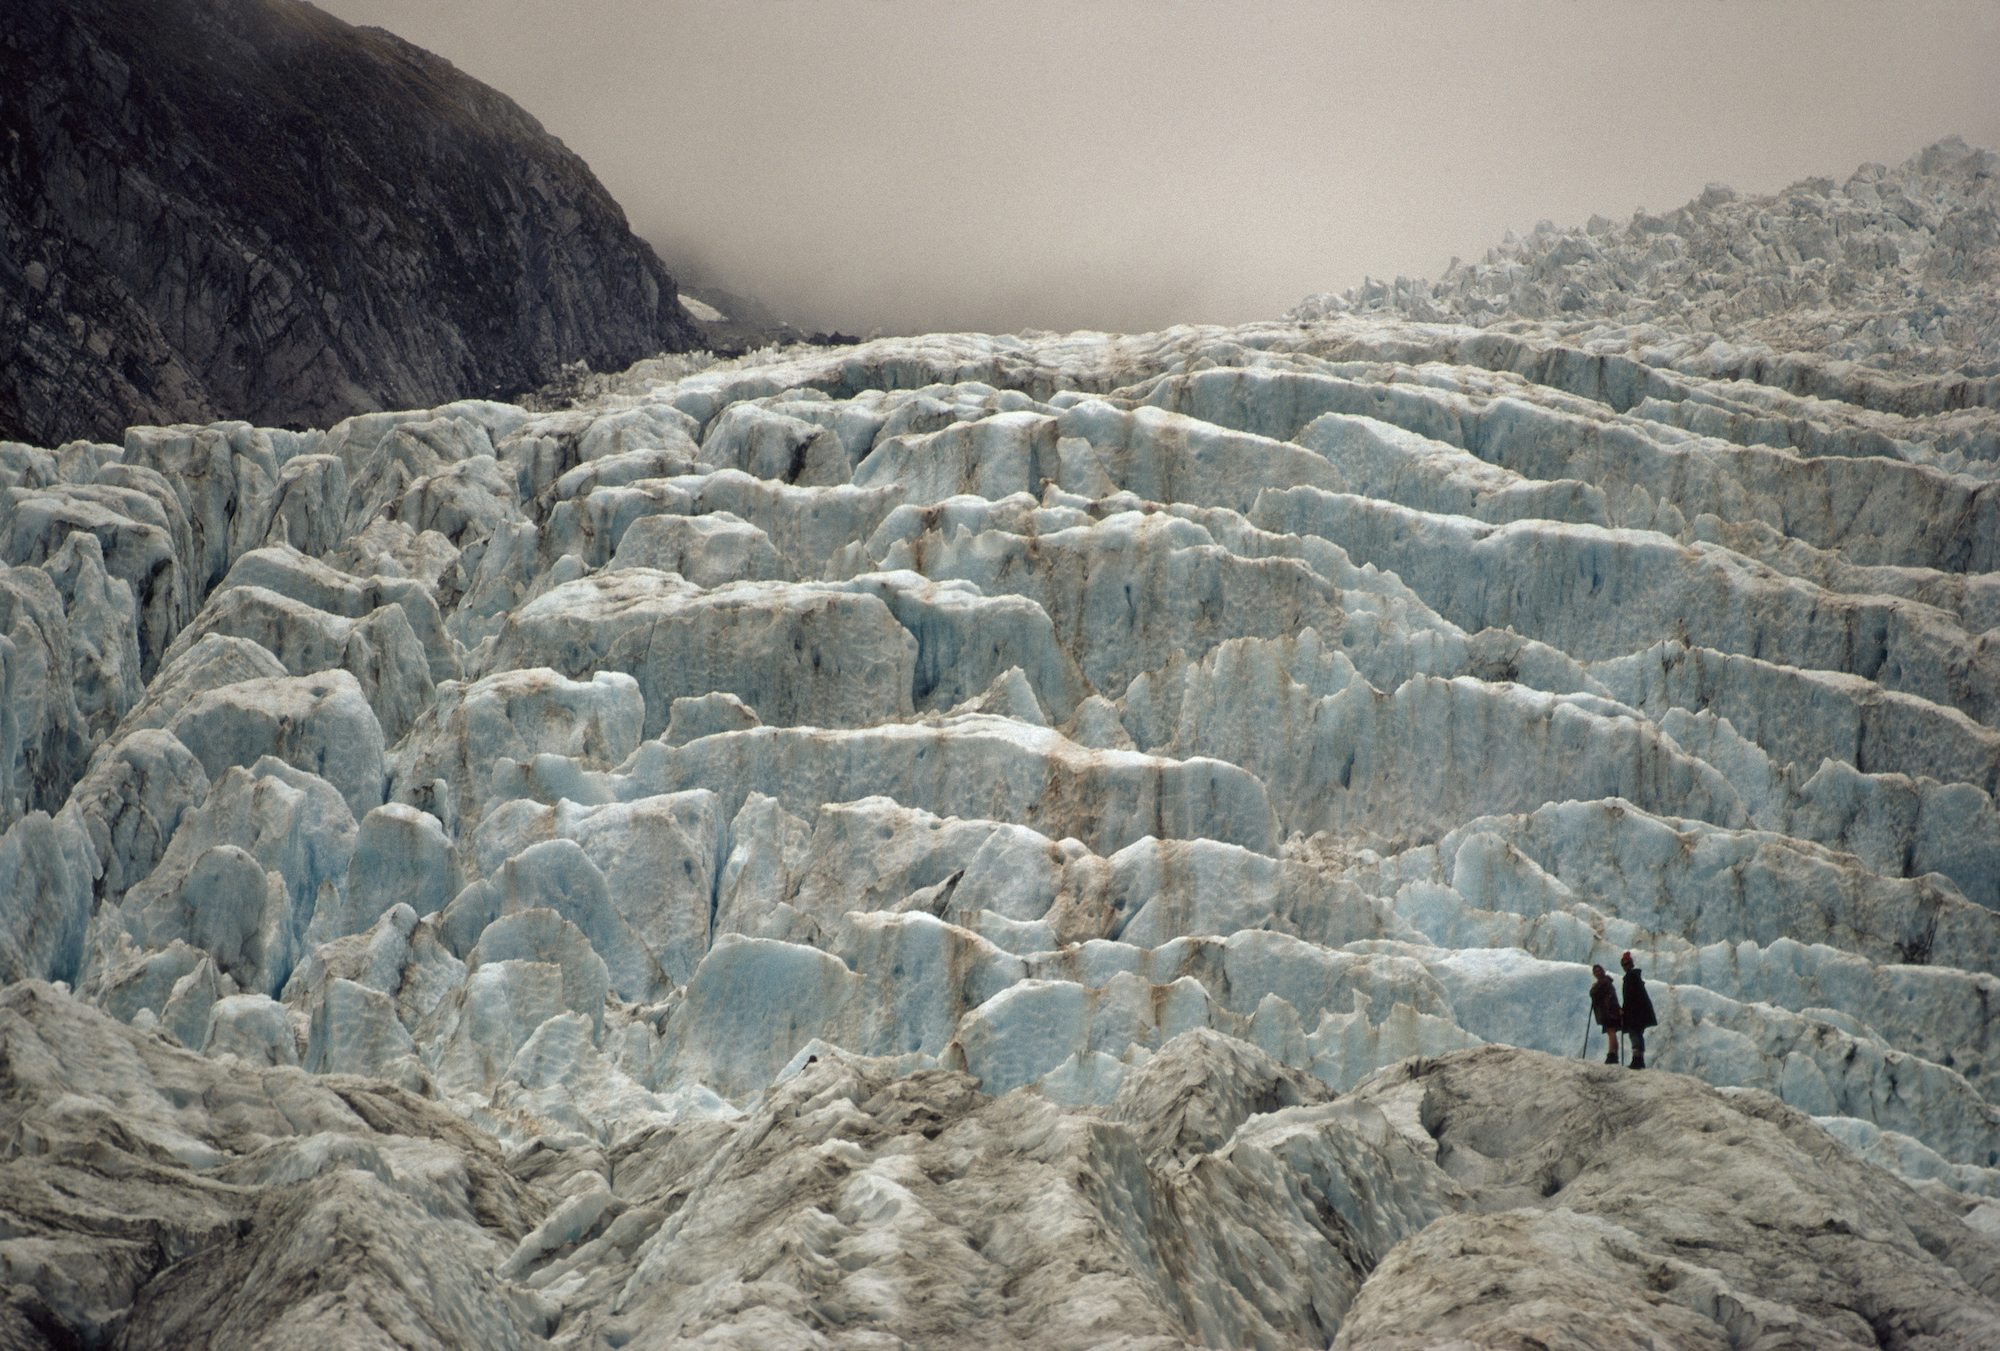 https://images.nationalgeographic.org/image/upload/v1648557309/EducationHub/photos/hikers-on-glacier.jpg